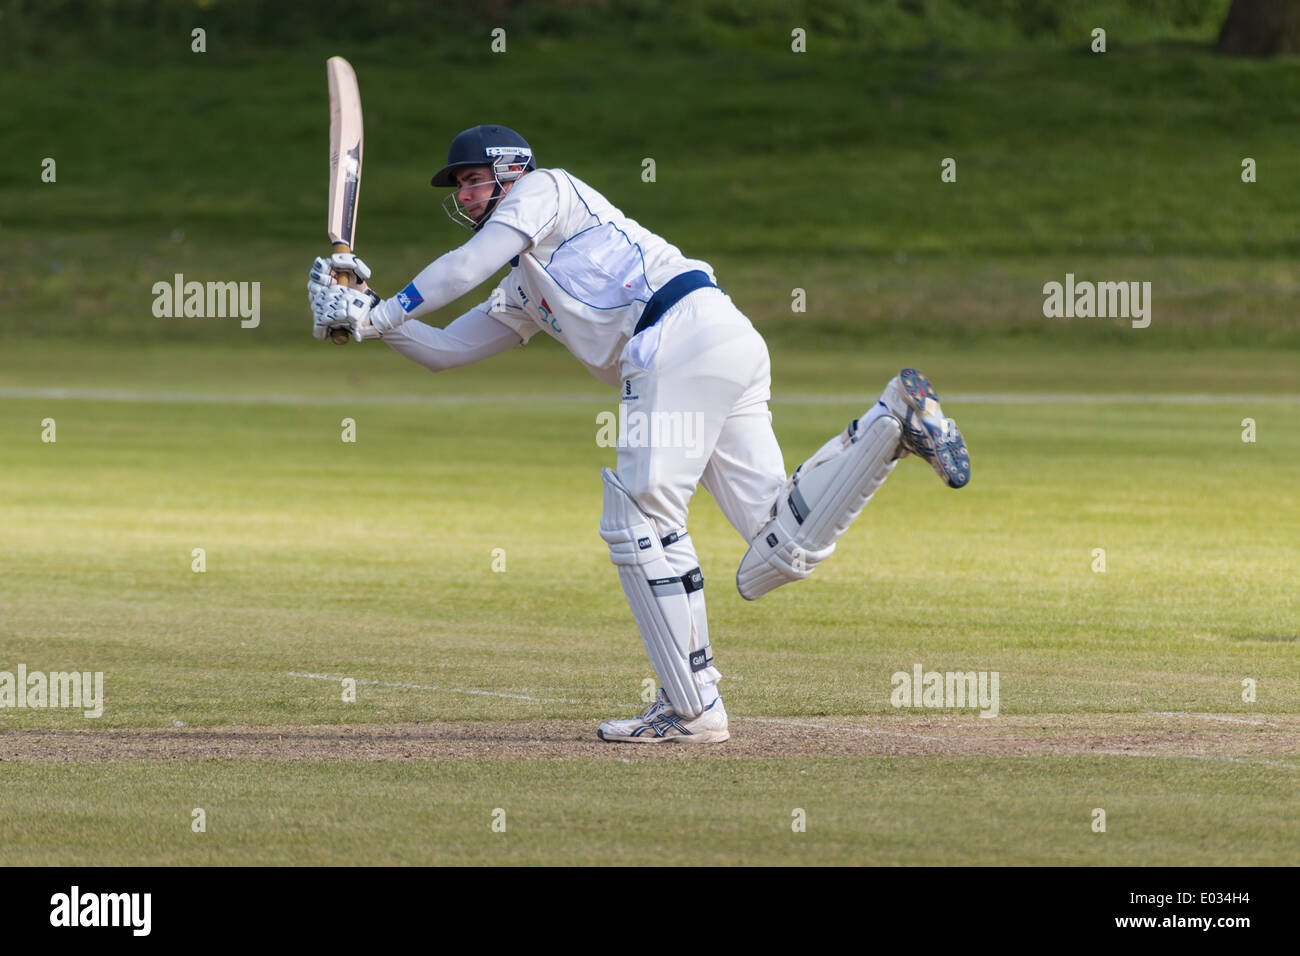 Graceful Cricketer Batsman Stock Photo